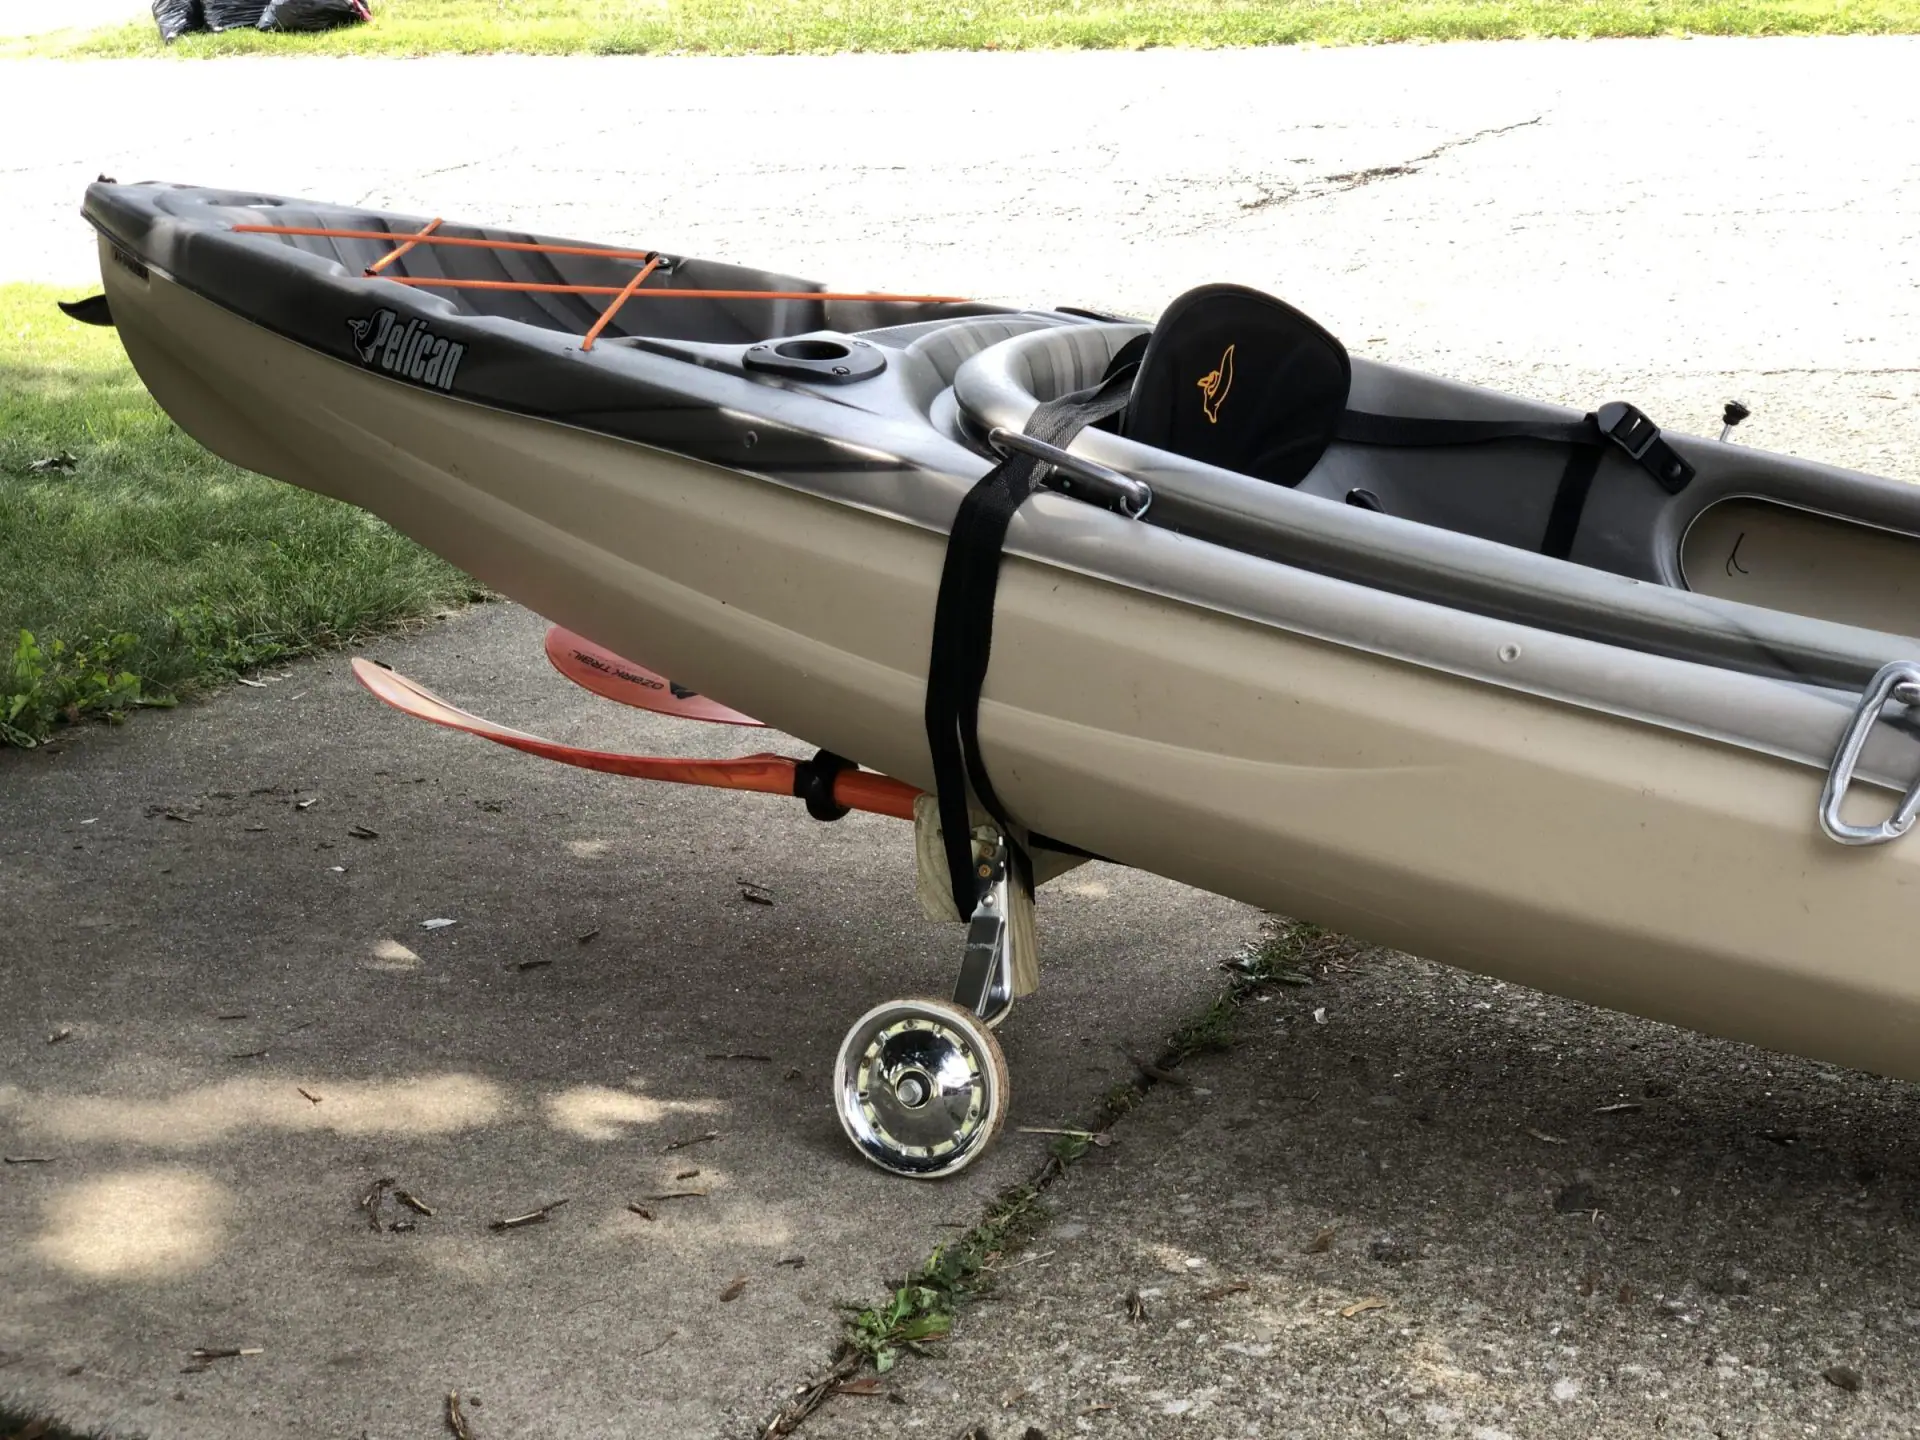 DIY kayak cart - Inexpensive way to build one yourself - That